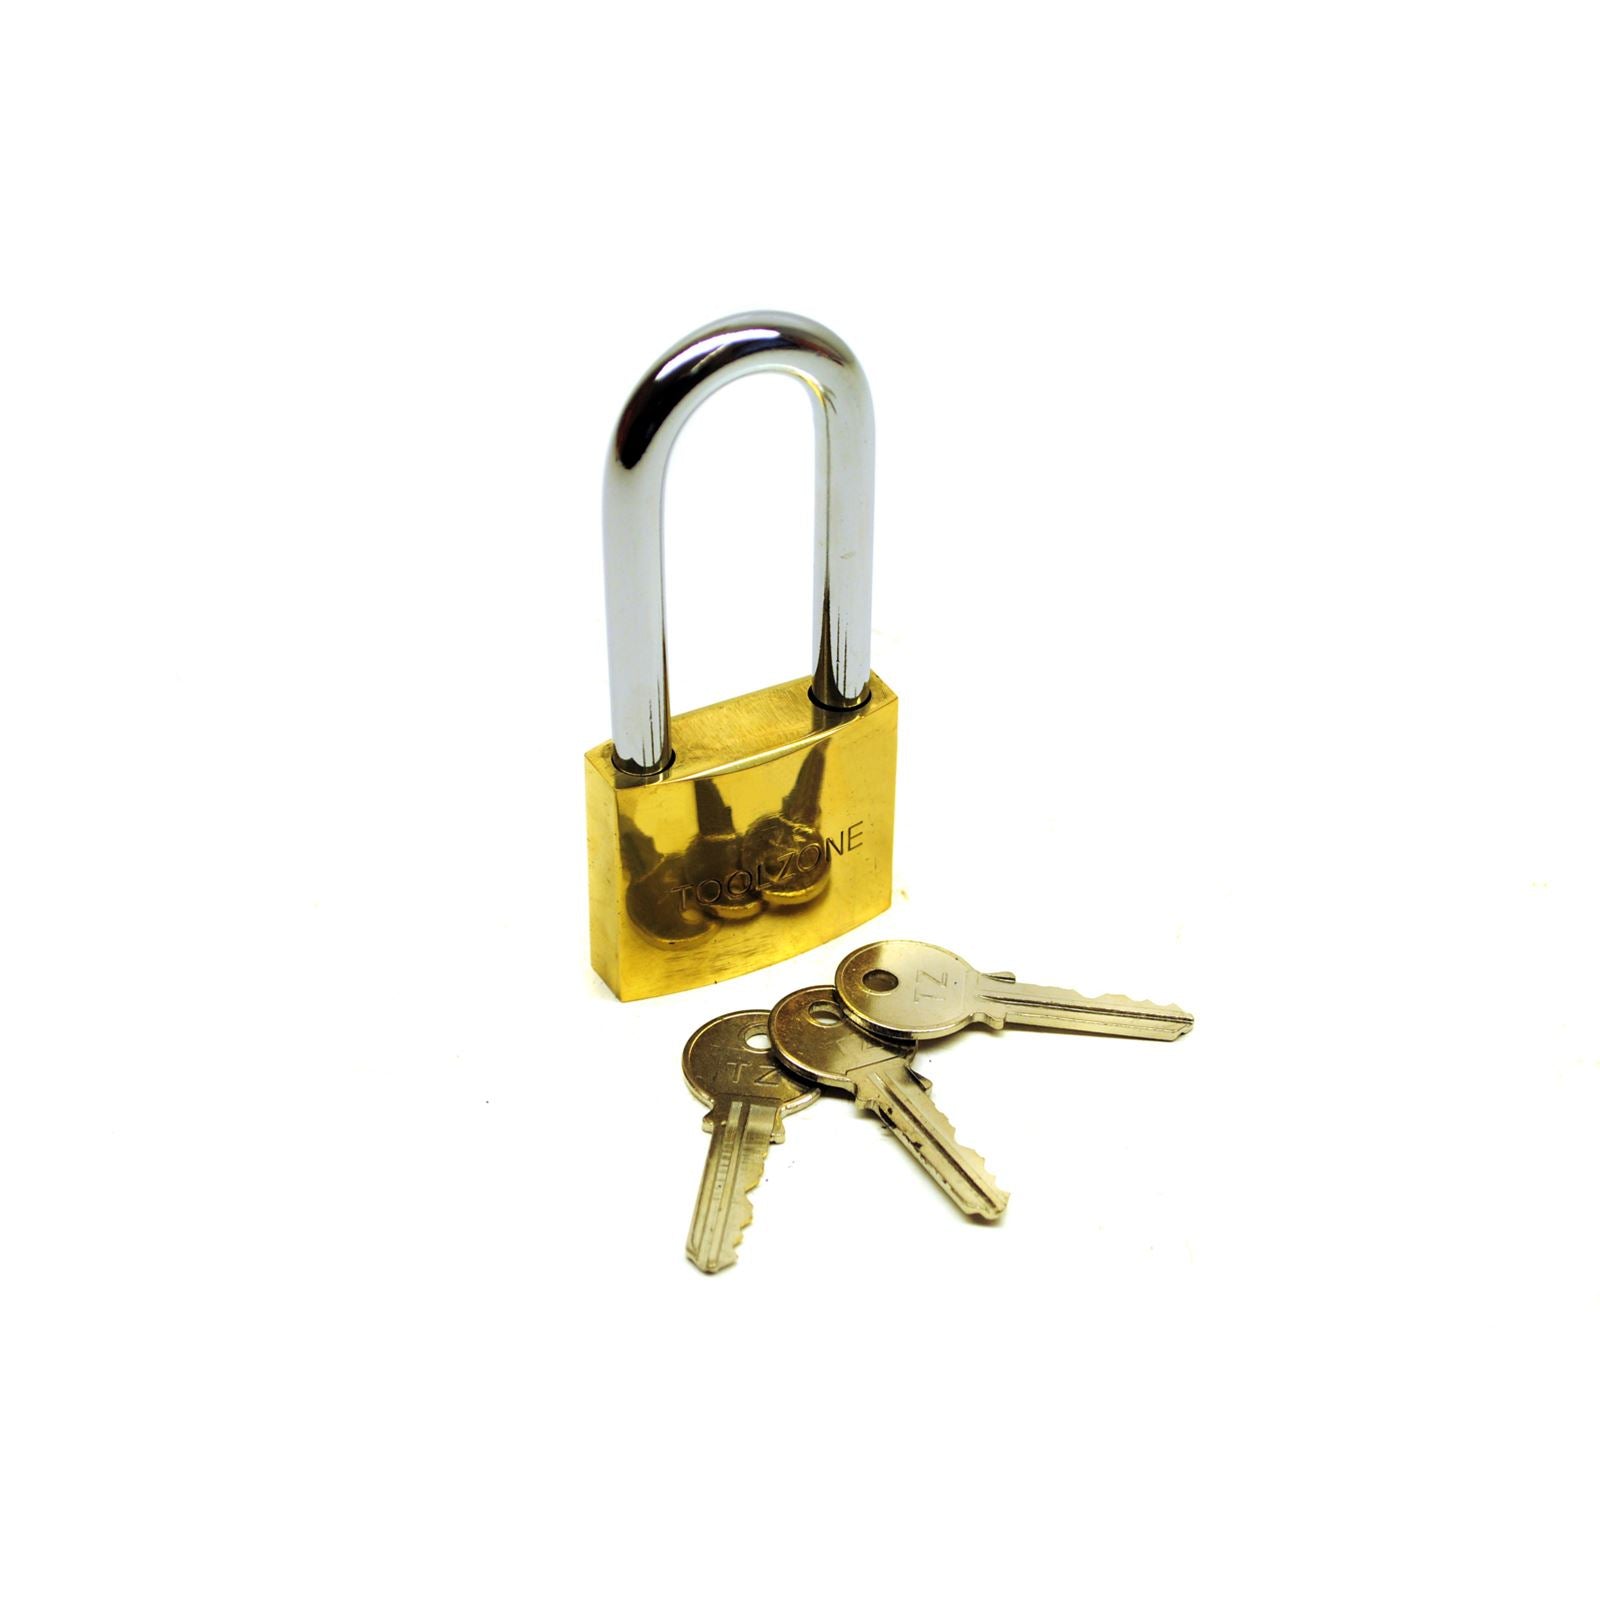 50mm long shackle brass padlock 3 keys security / lock / shed / garage TE620